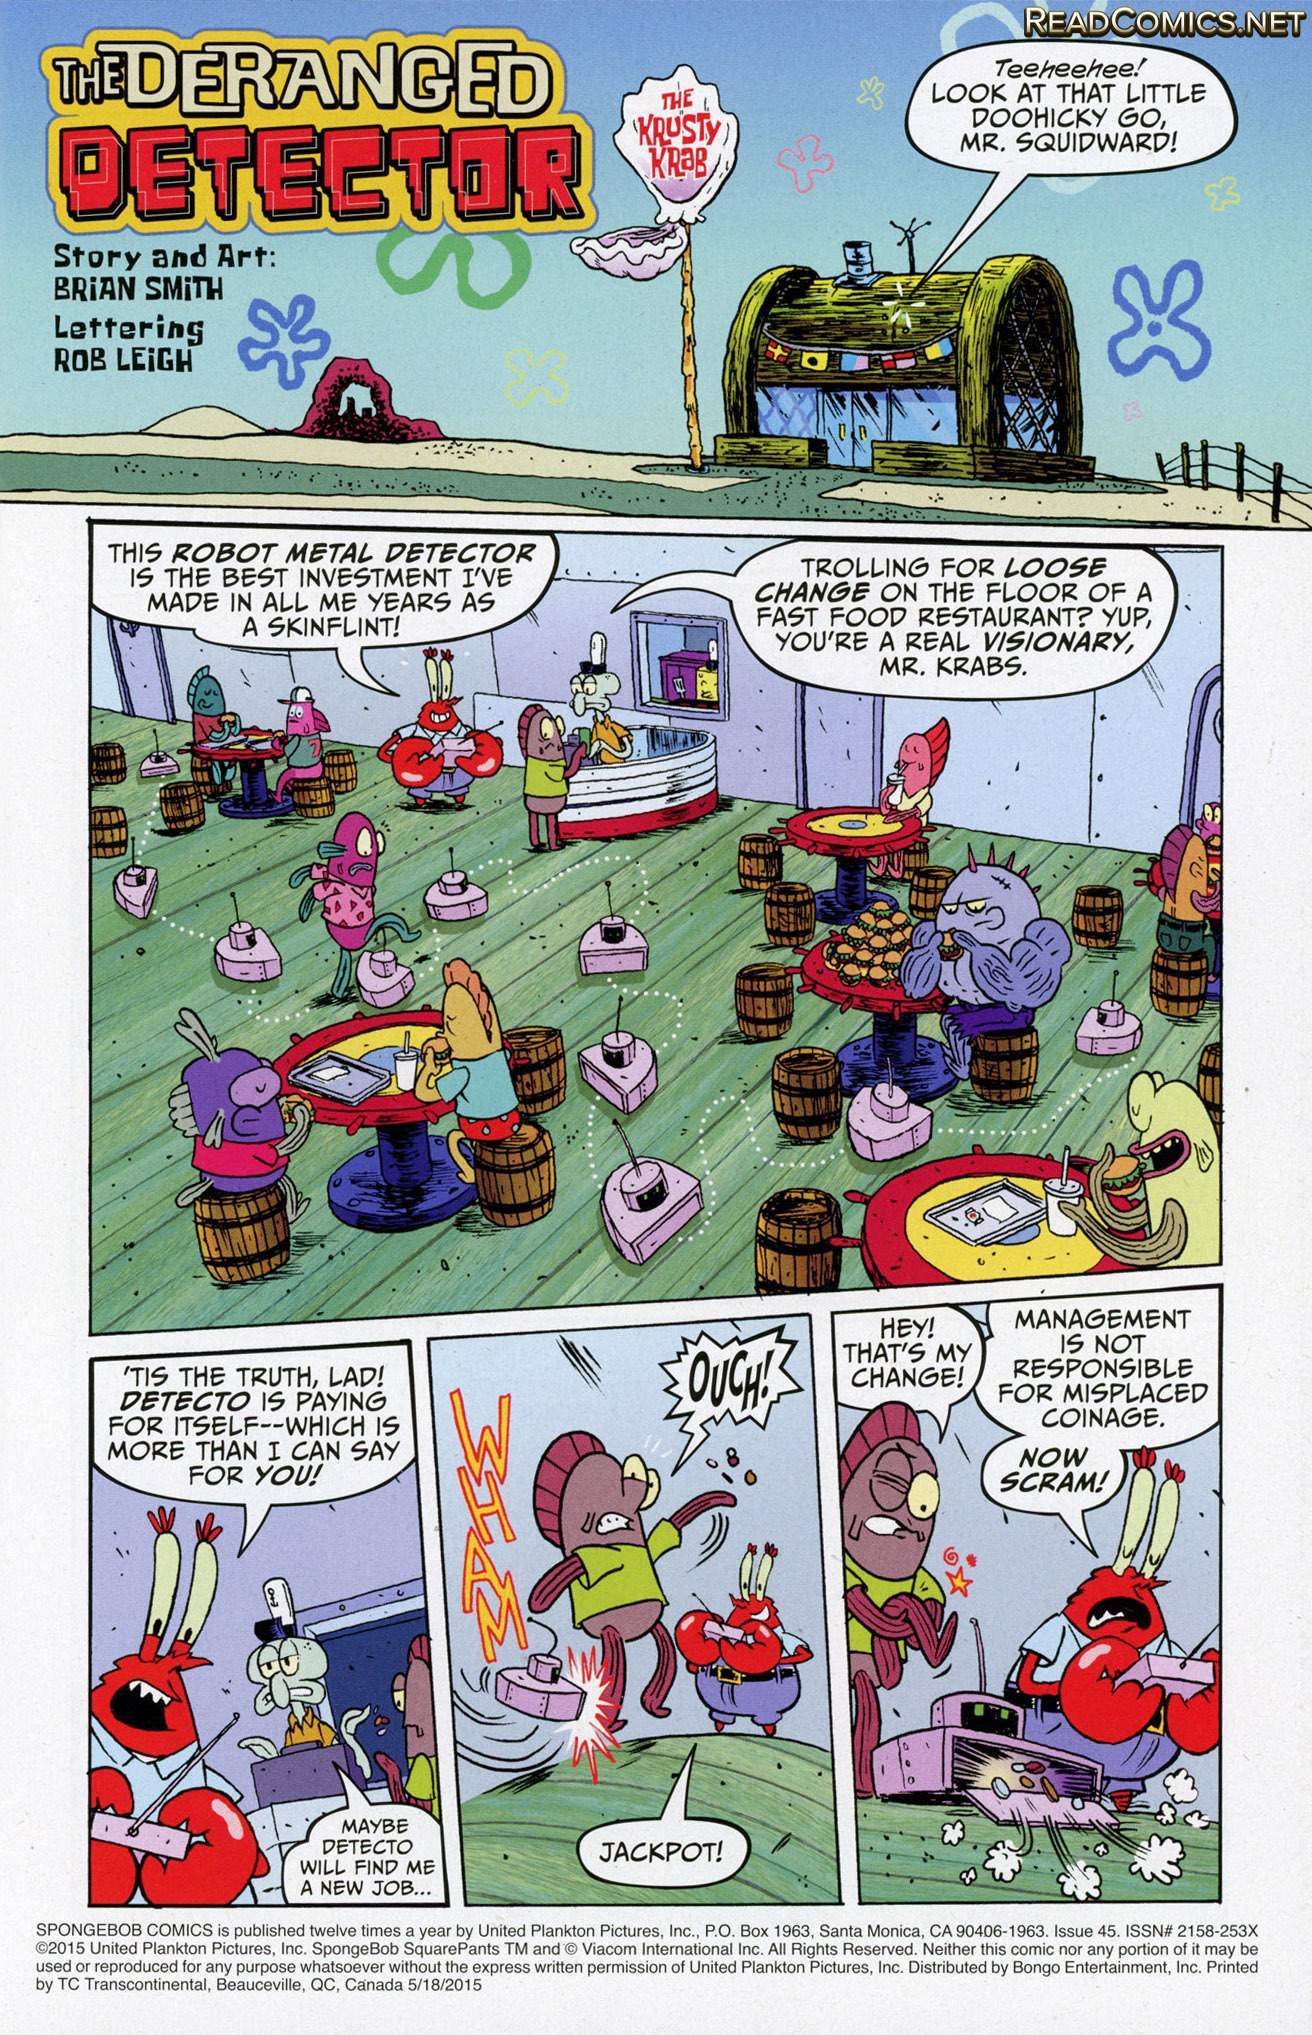 SpongeBob Comics (2011-): Chapter 45 - Page 3